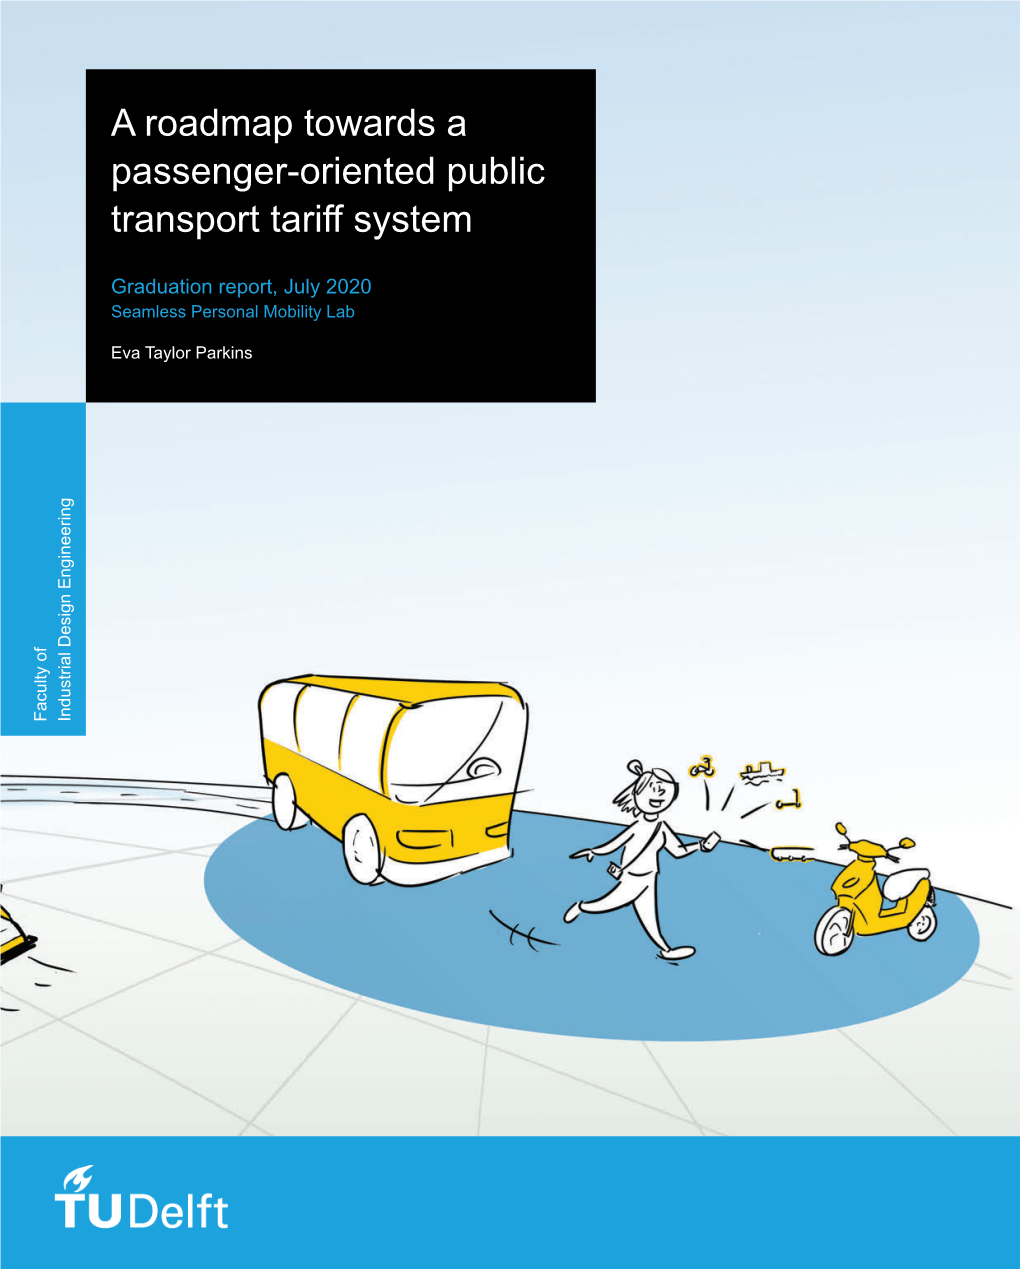 A Roadmap Towards a Passenger-Oriented Public Transport Tariff System